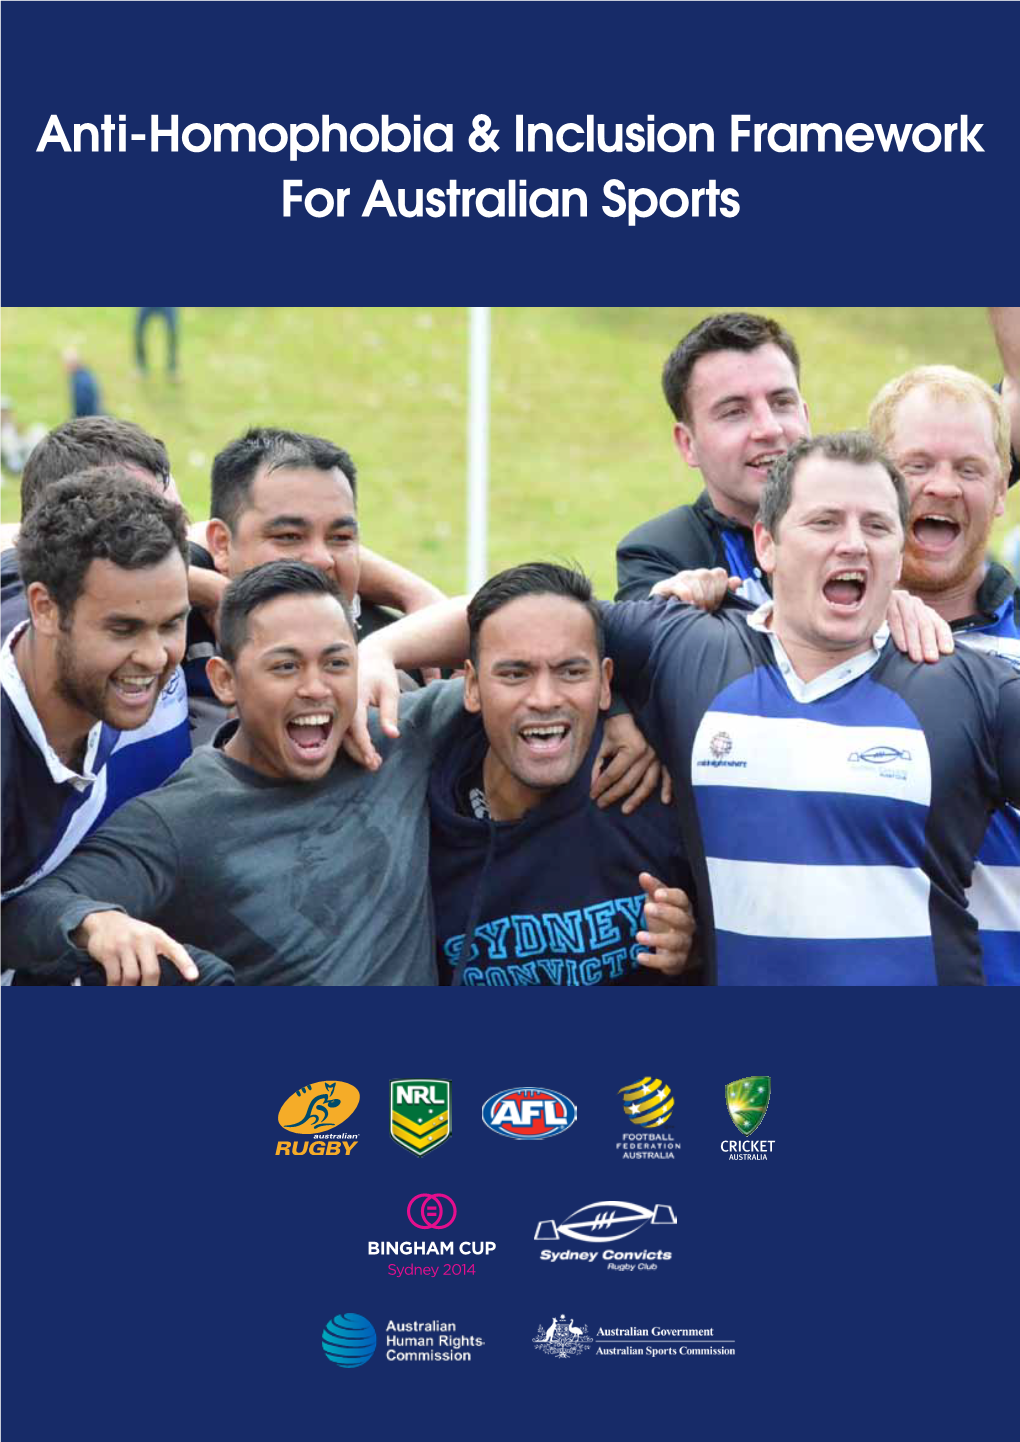 Anti-Homophobia & Inclusion Framework for Australian Sports